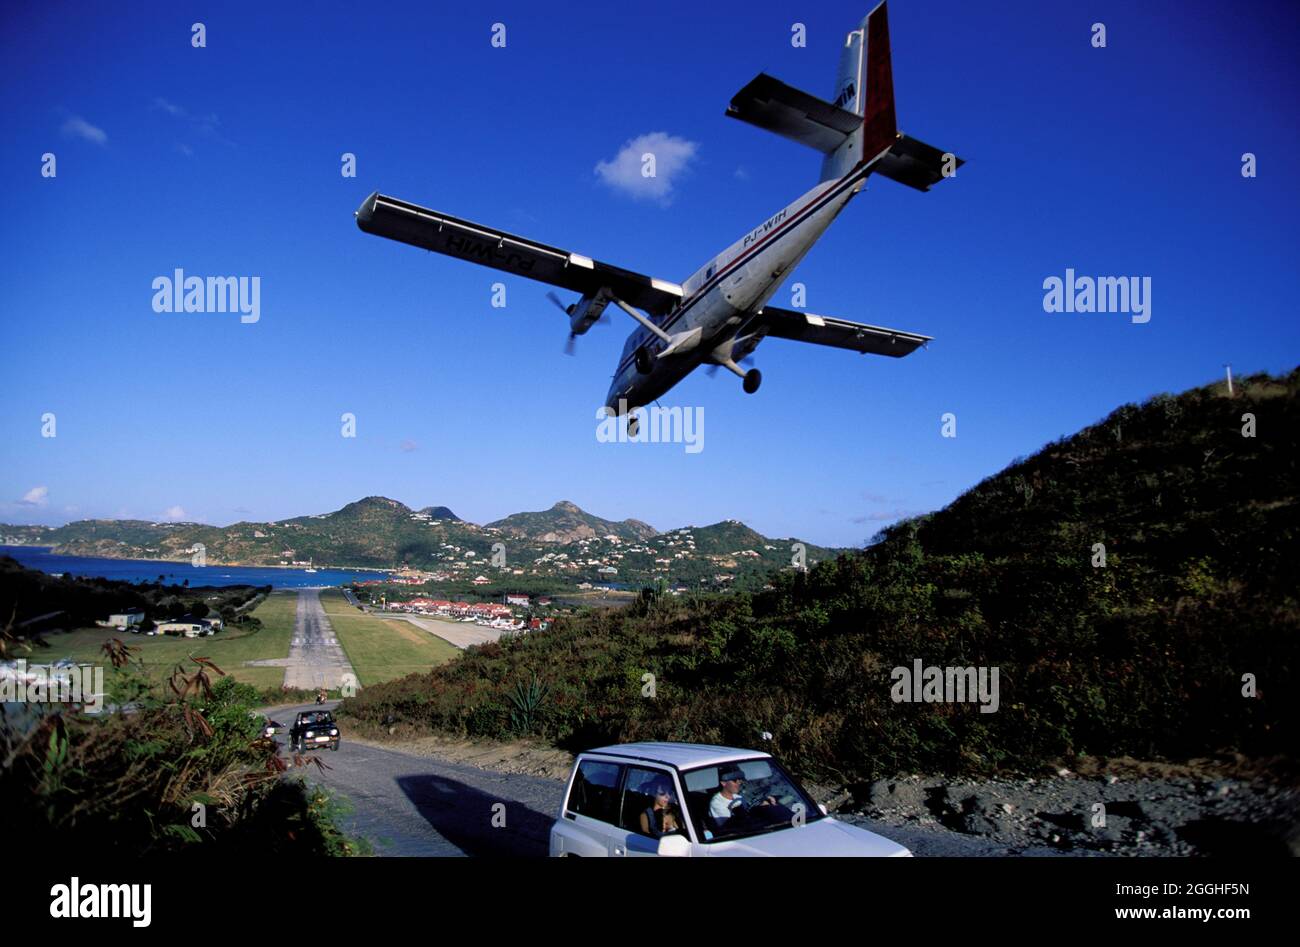 Snaphappy St. Barts tourist grazed by plane